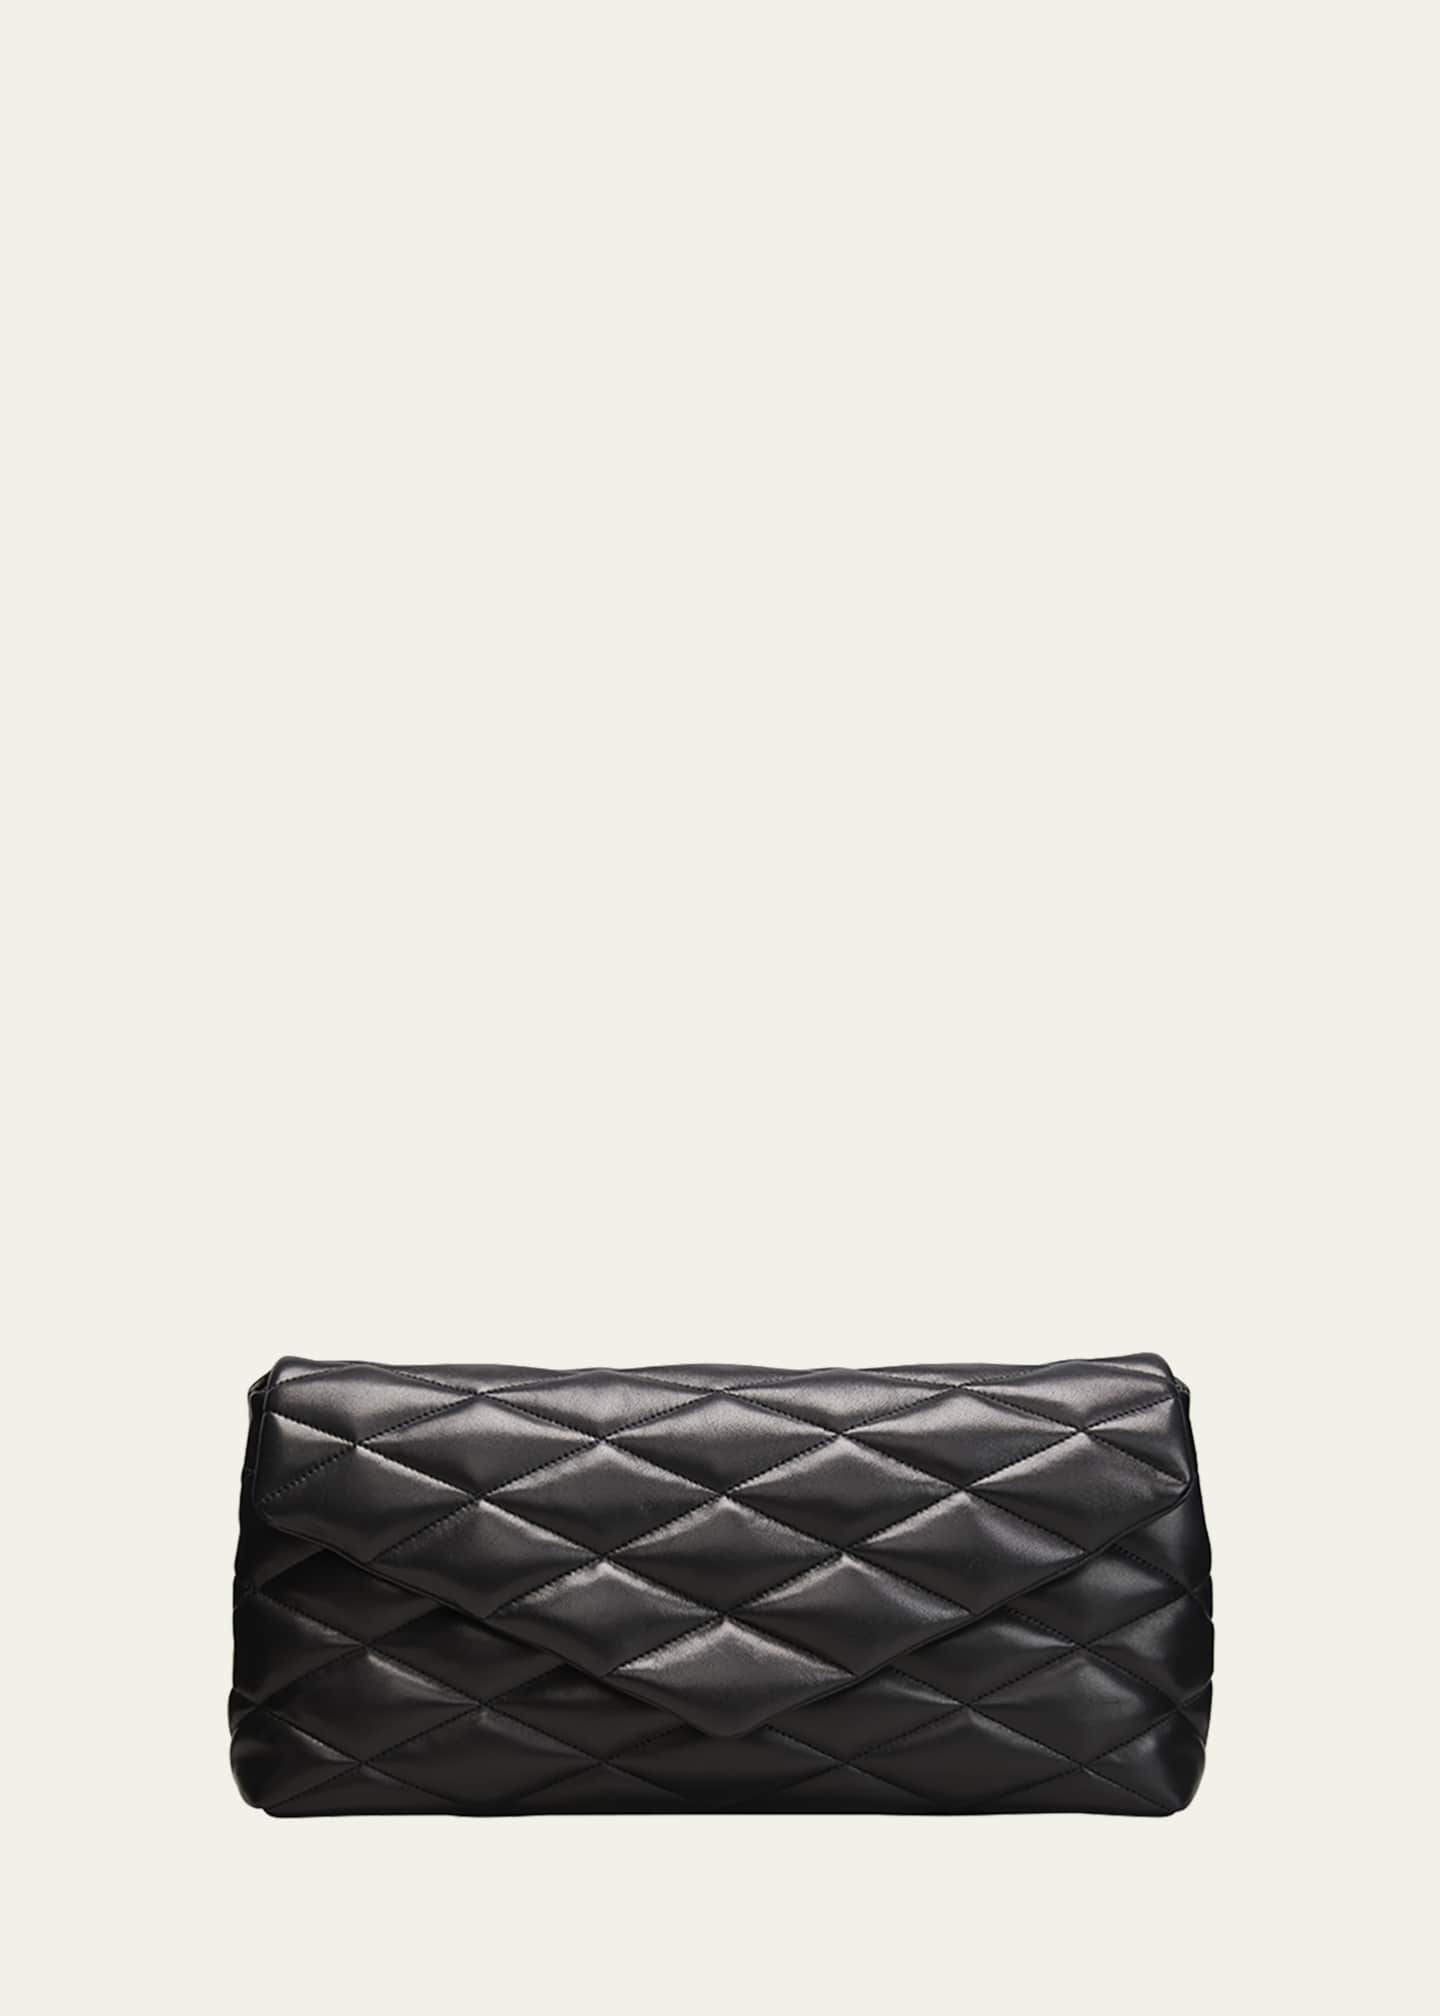 Saint Laurent Small YSL Envelope Leather Crossbody Bag - Bergdorf Goodman